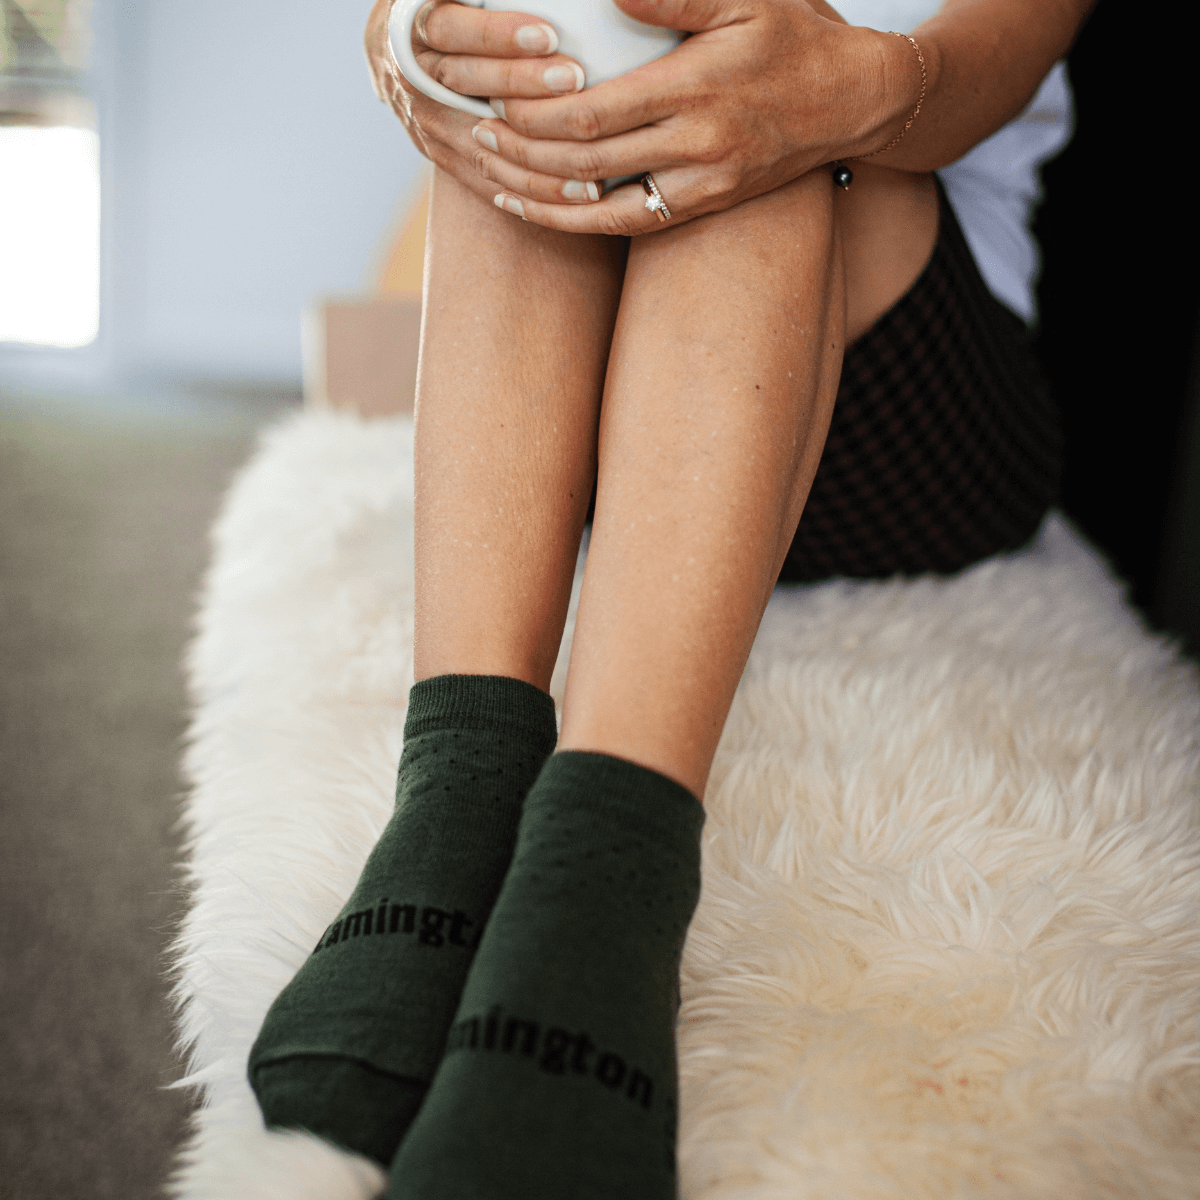 merino wool ankle socks man woman green nz aus